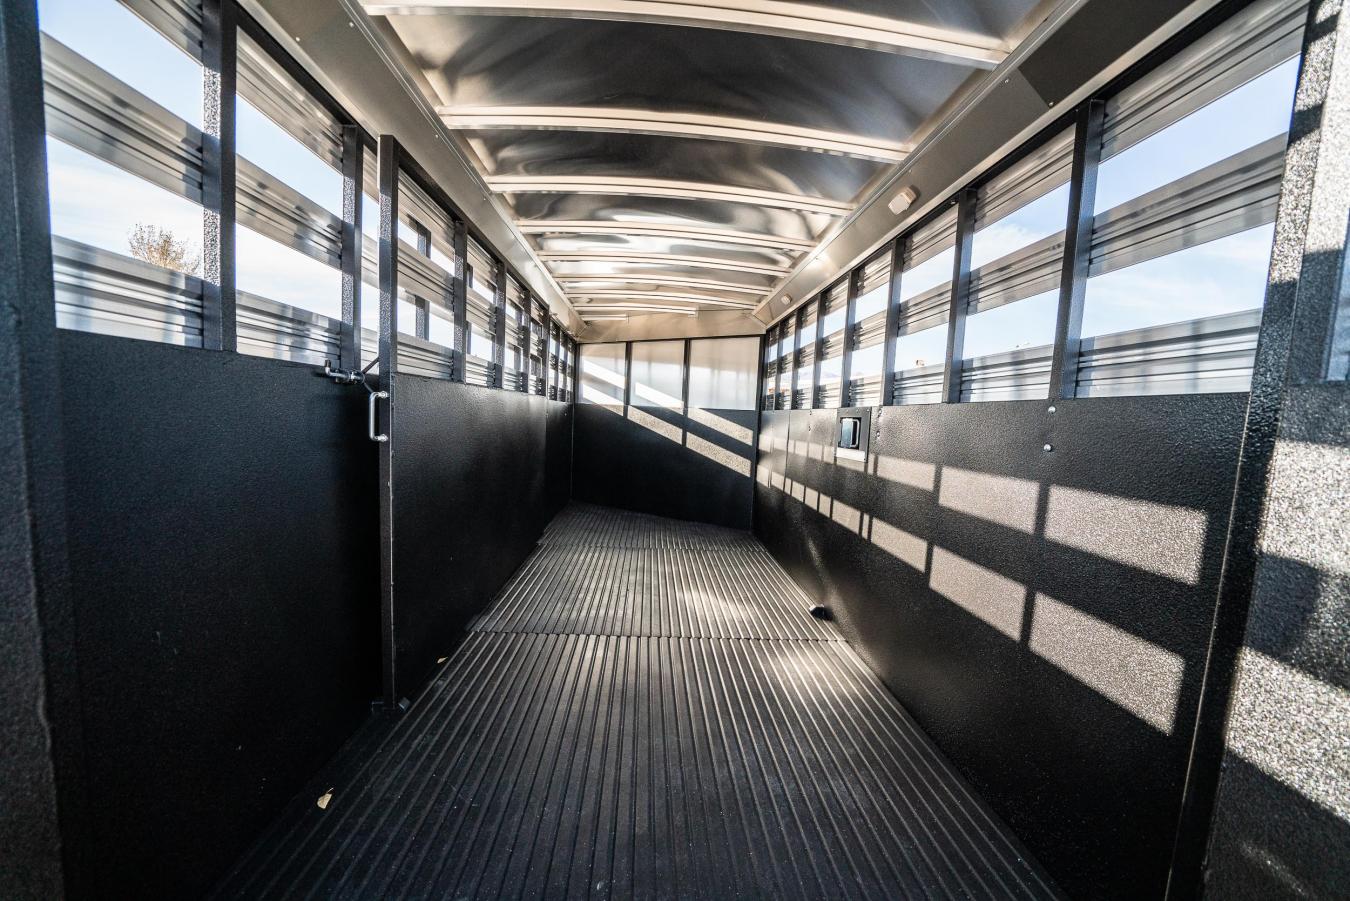 Interior shot of an empty Logan Coach Trailer